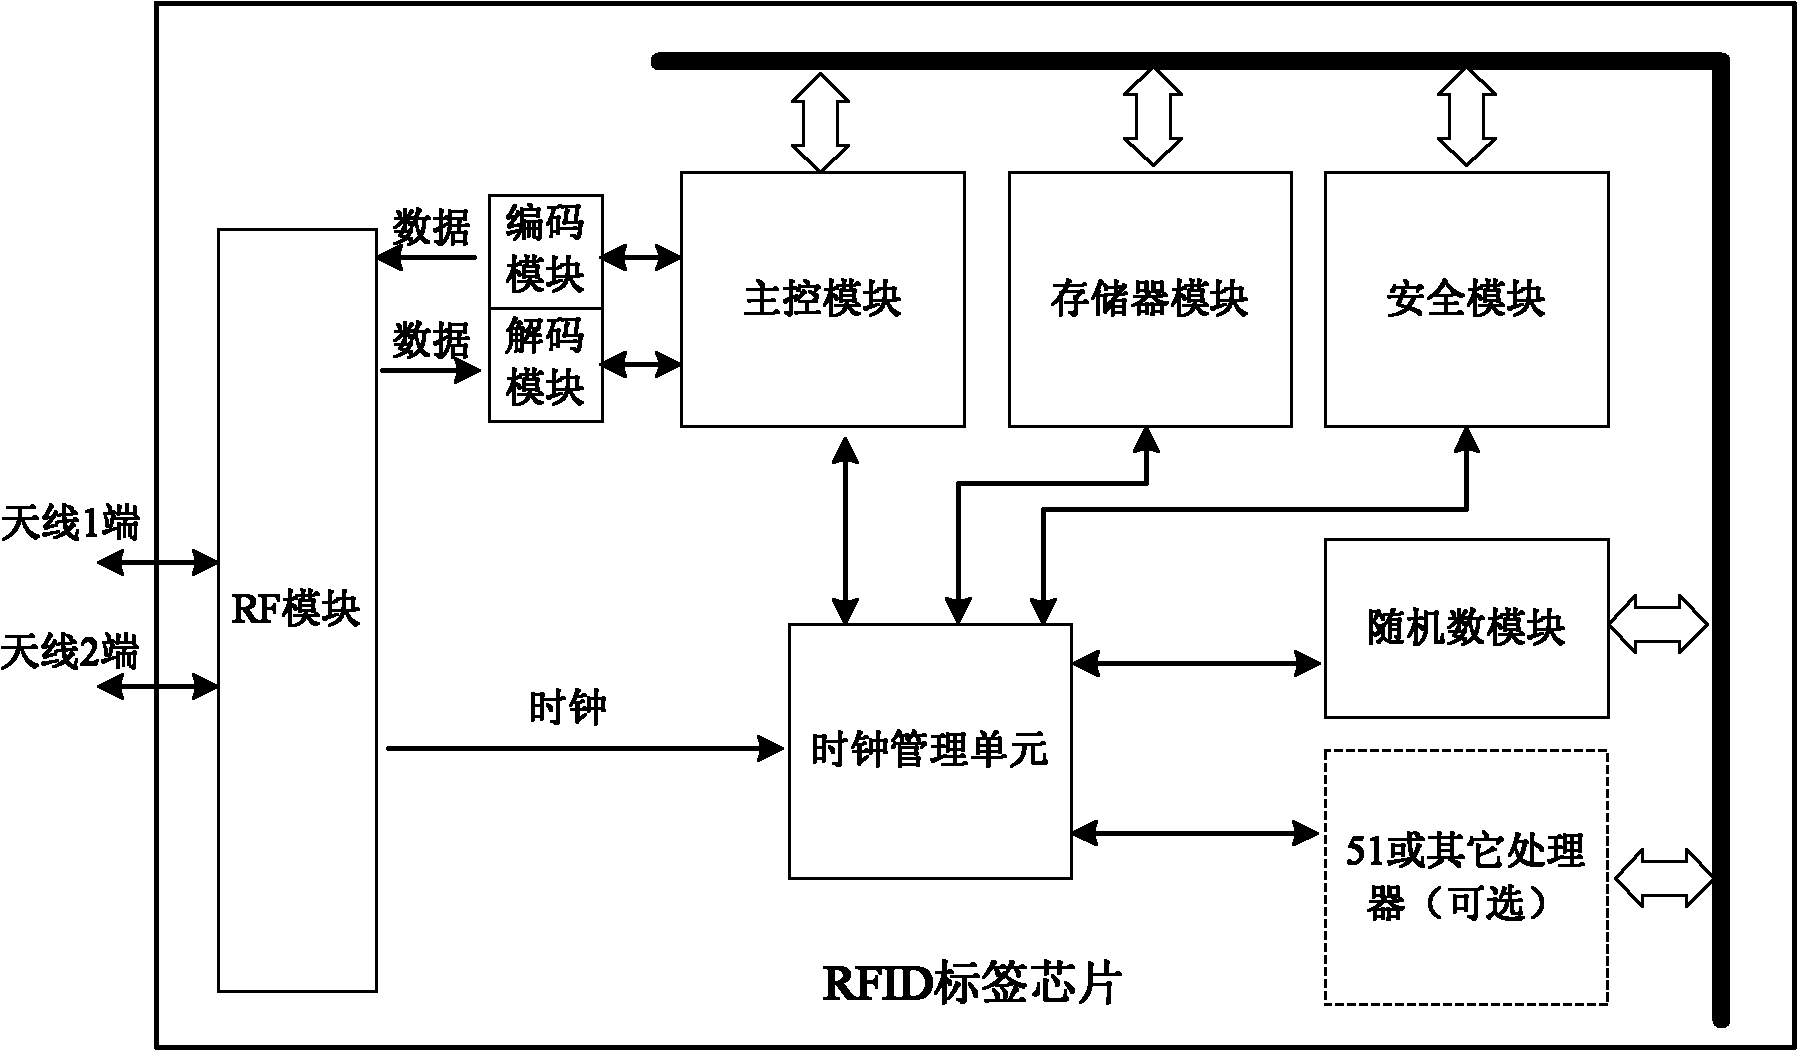 Clock management unit of RFID tag chip